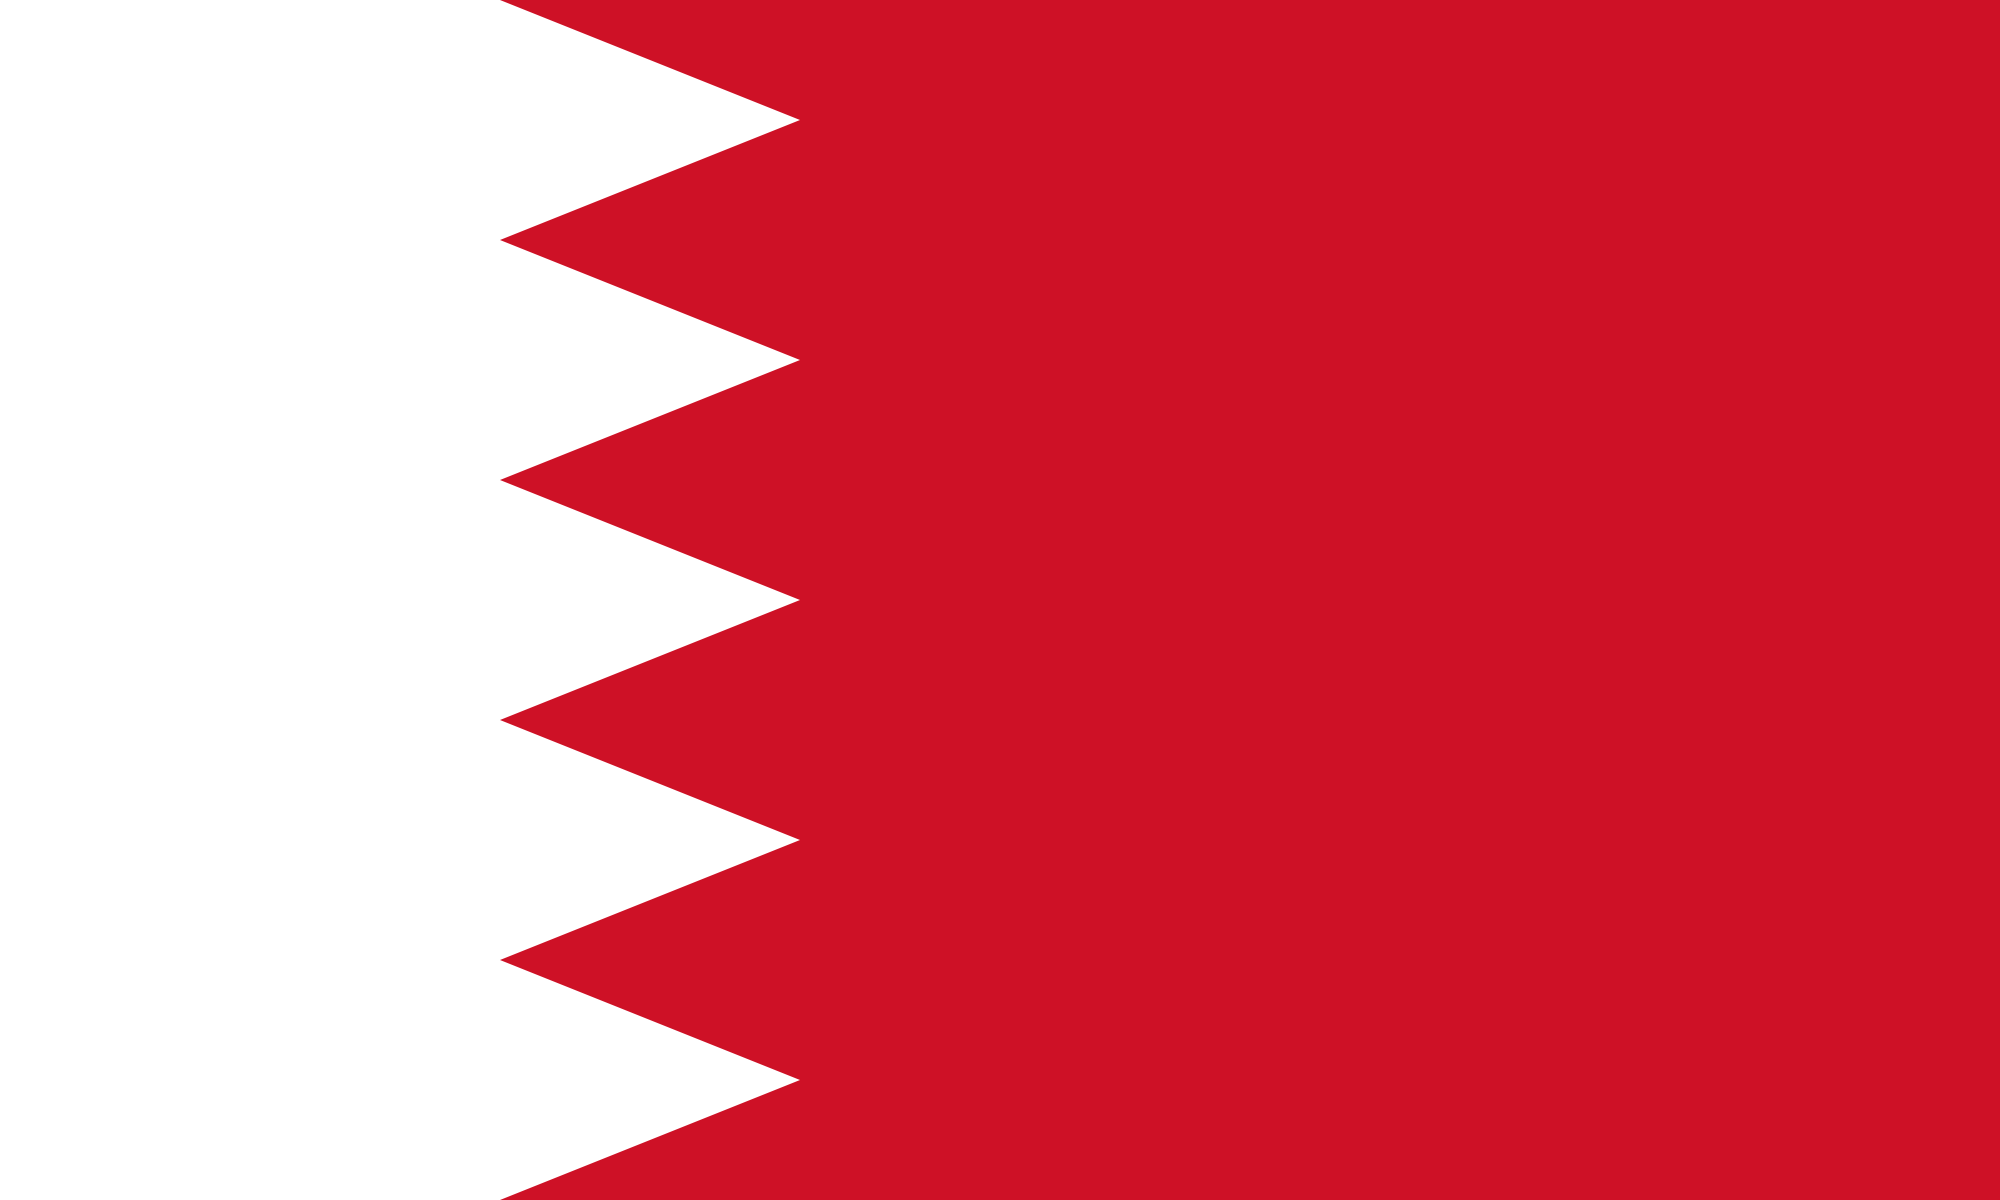 File:Flag of Bahrain.png, Bahrain PNG - Free PNG